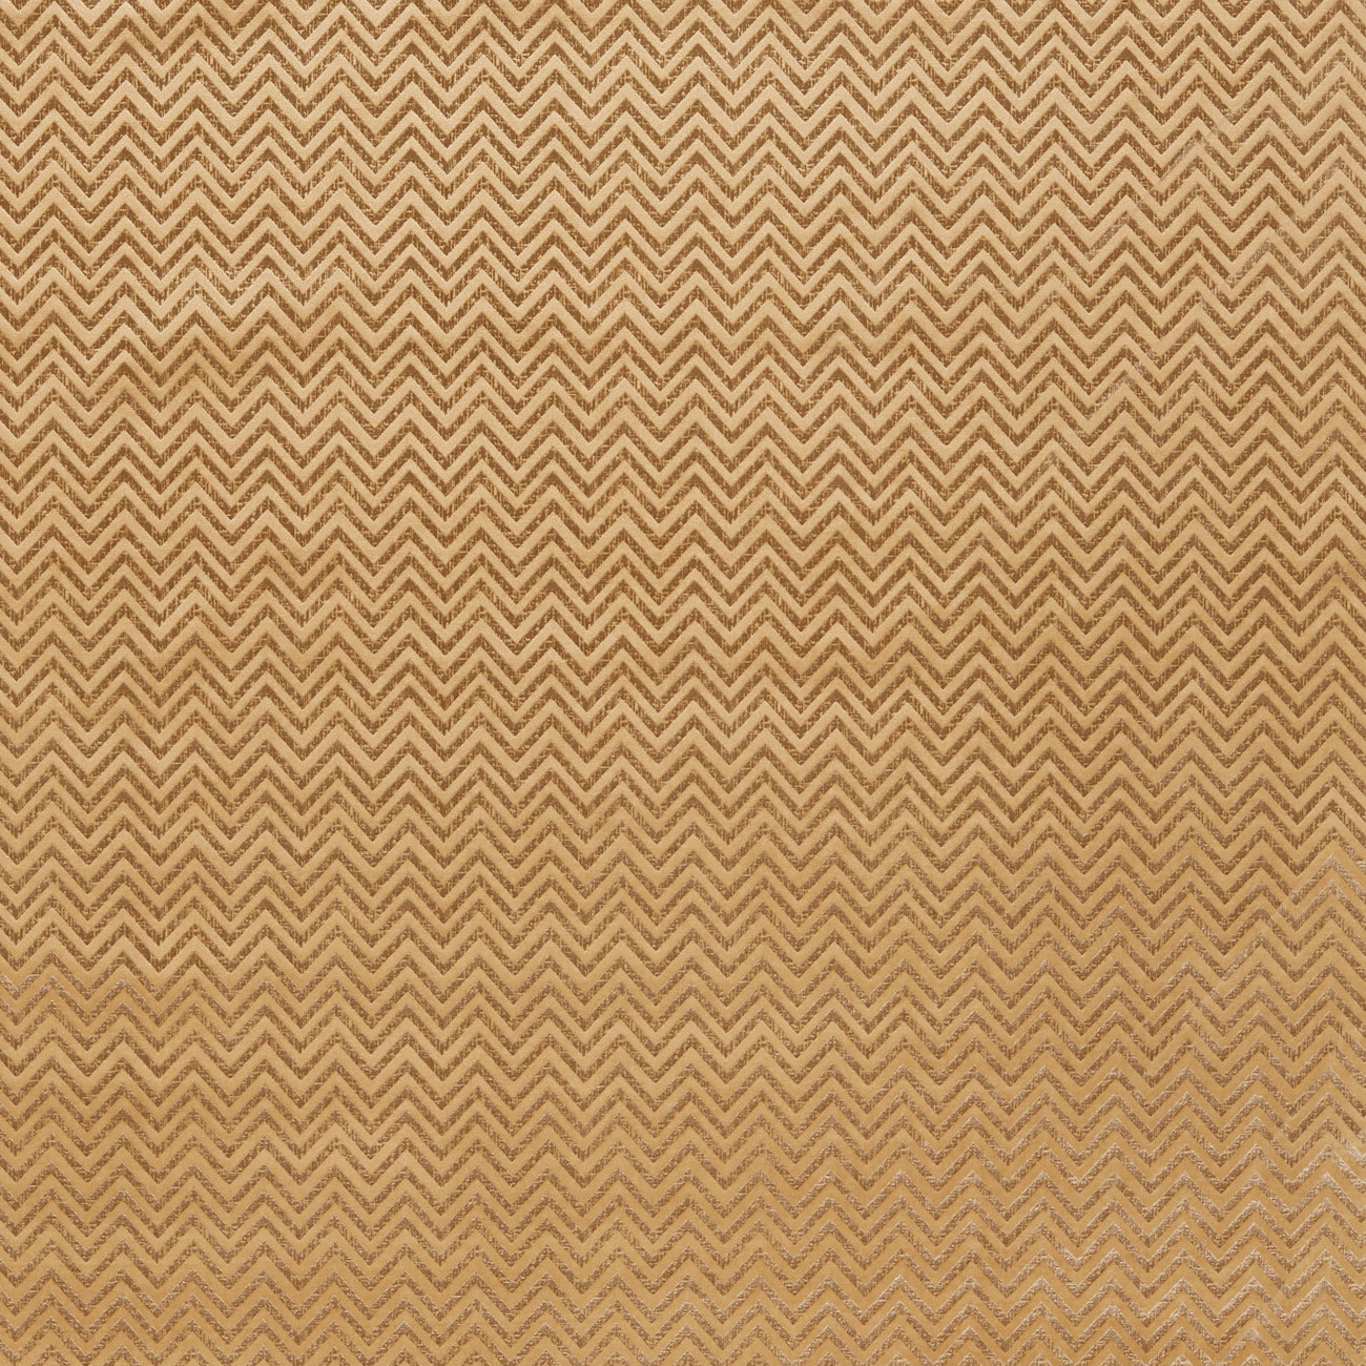 Nexus Gold Fabric by STG